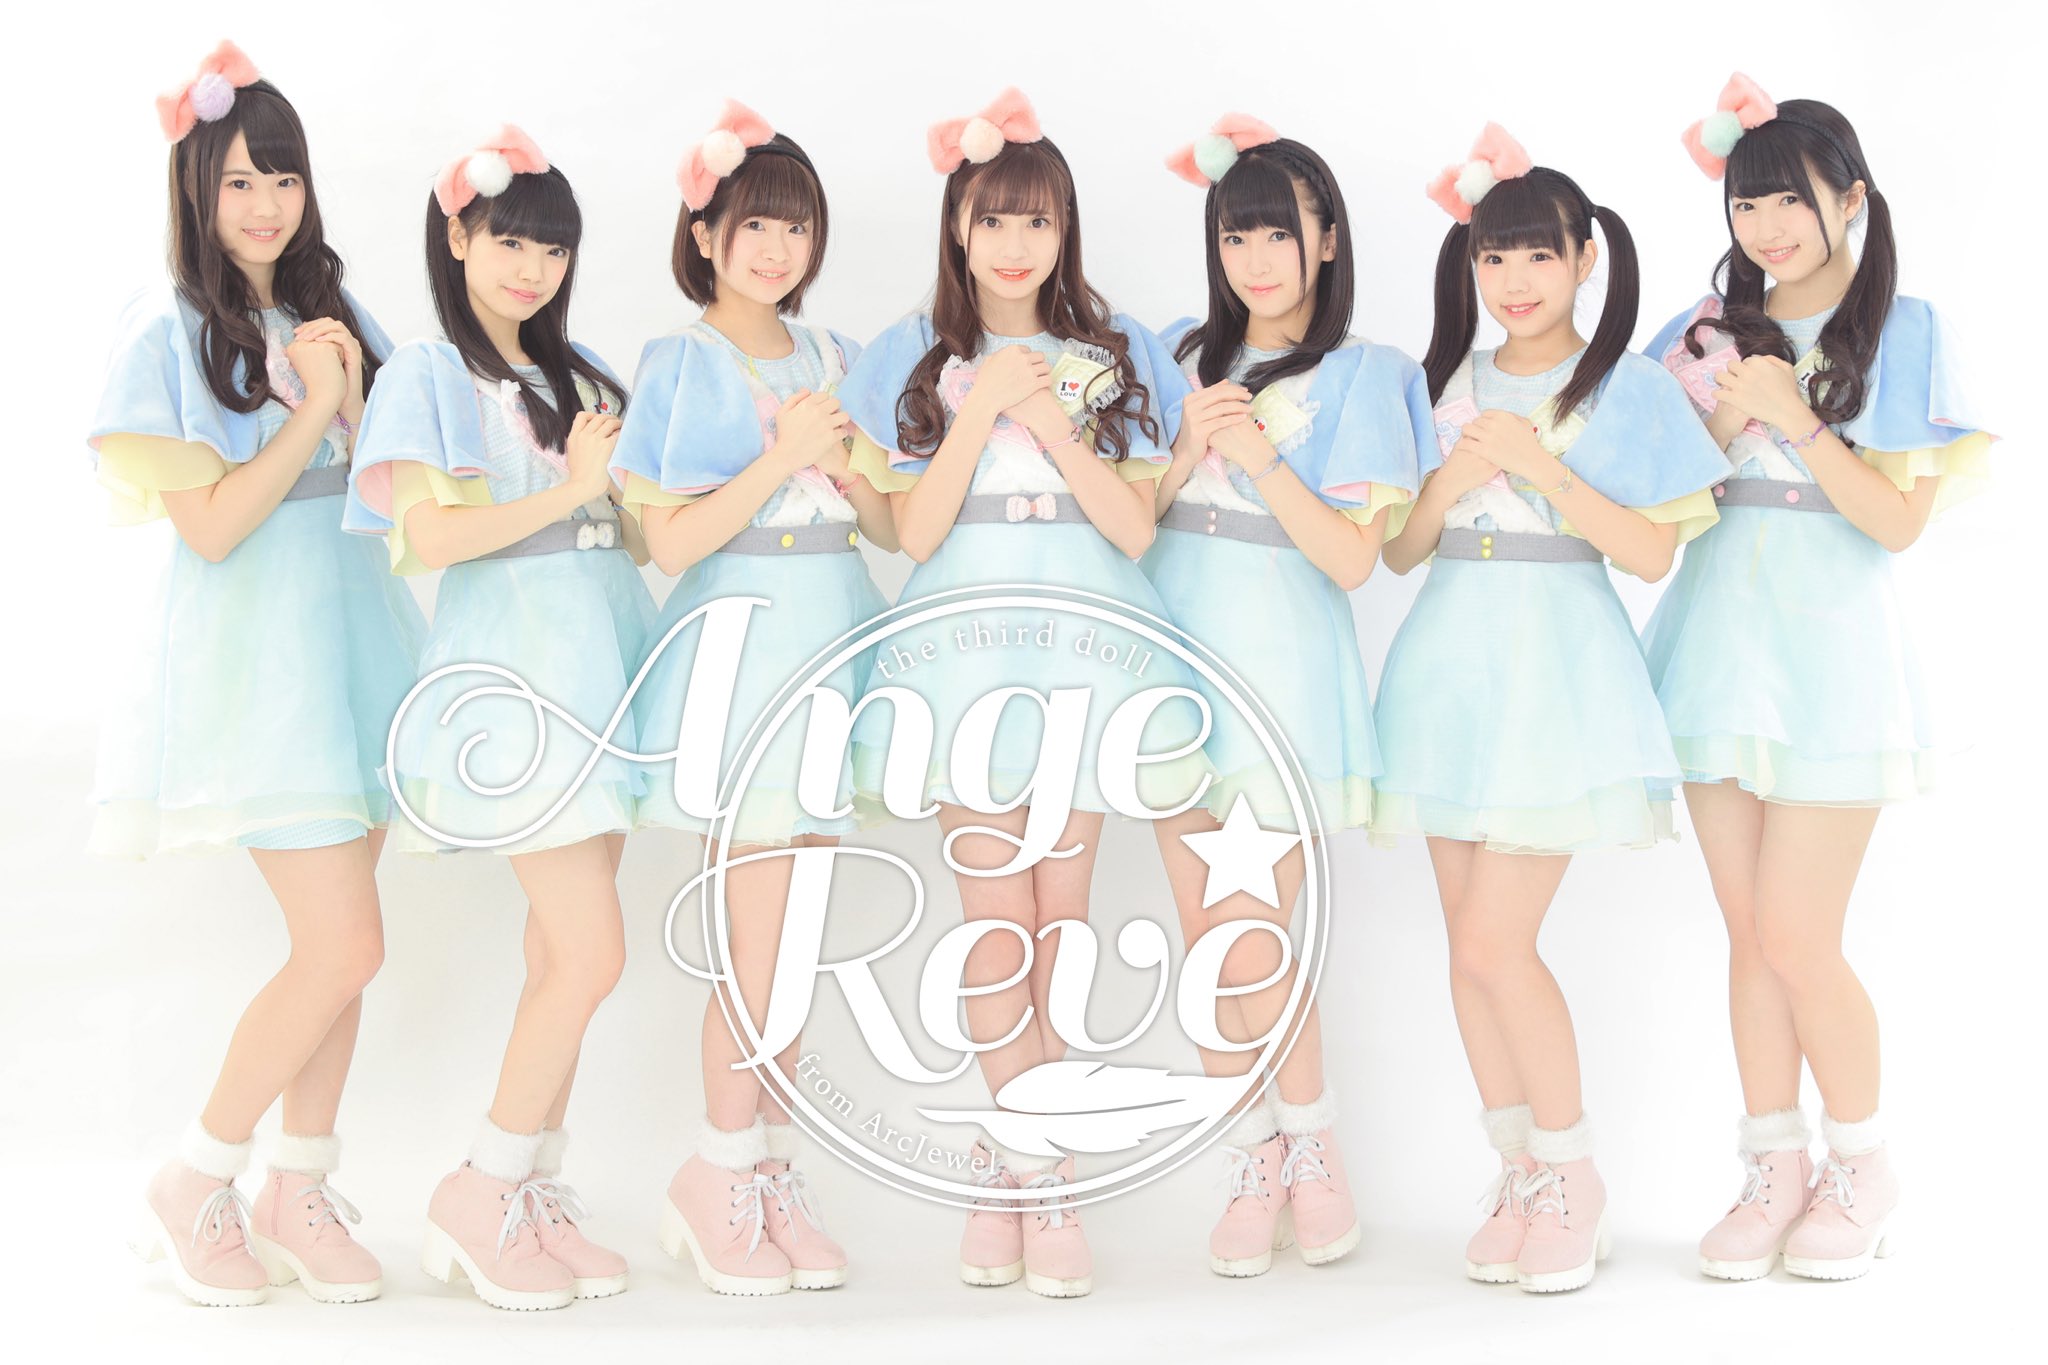 Tachibana Haruka : Ange Reve | 橘はるか : Ange☆Reve